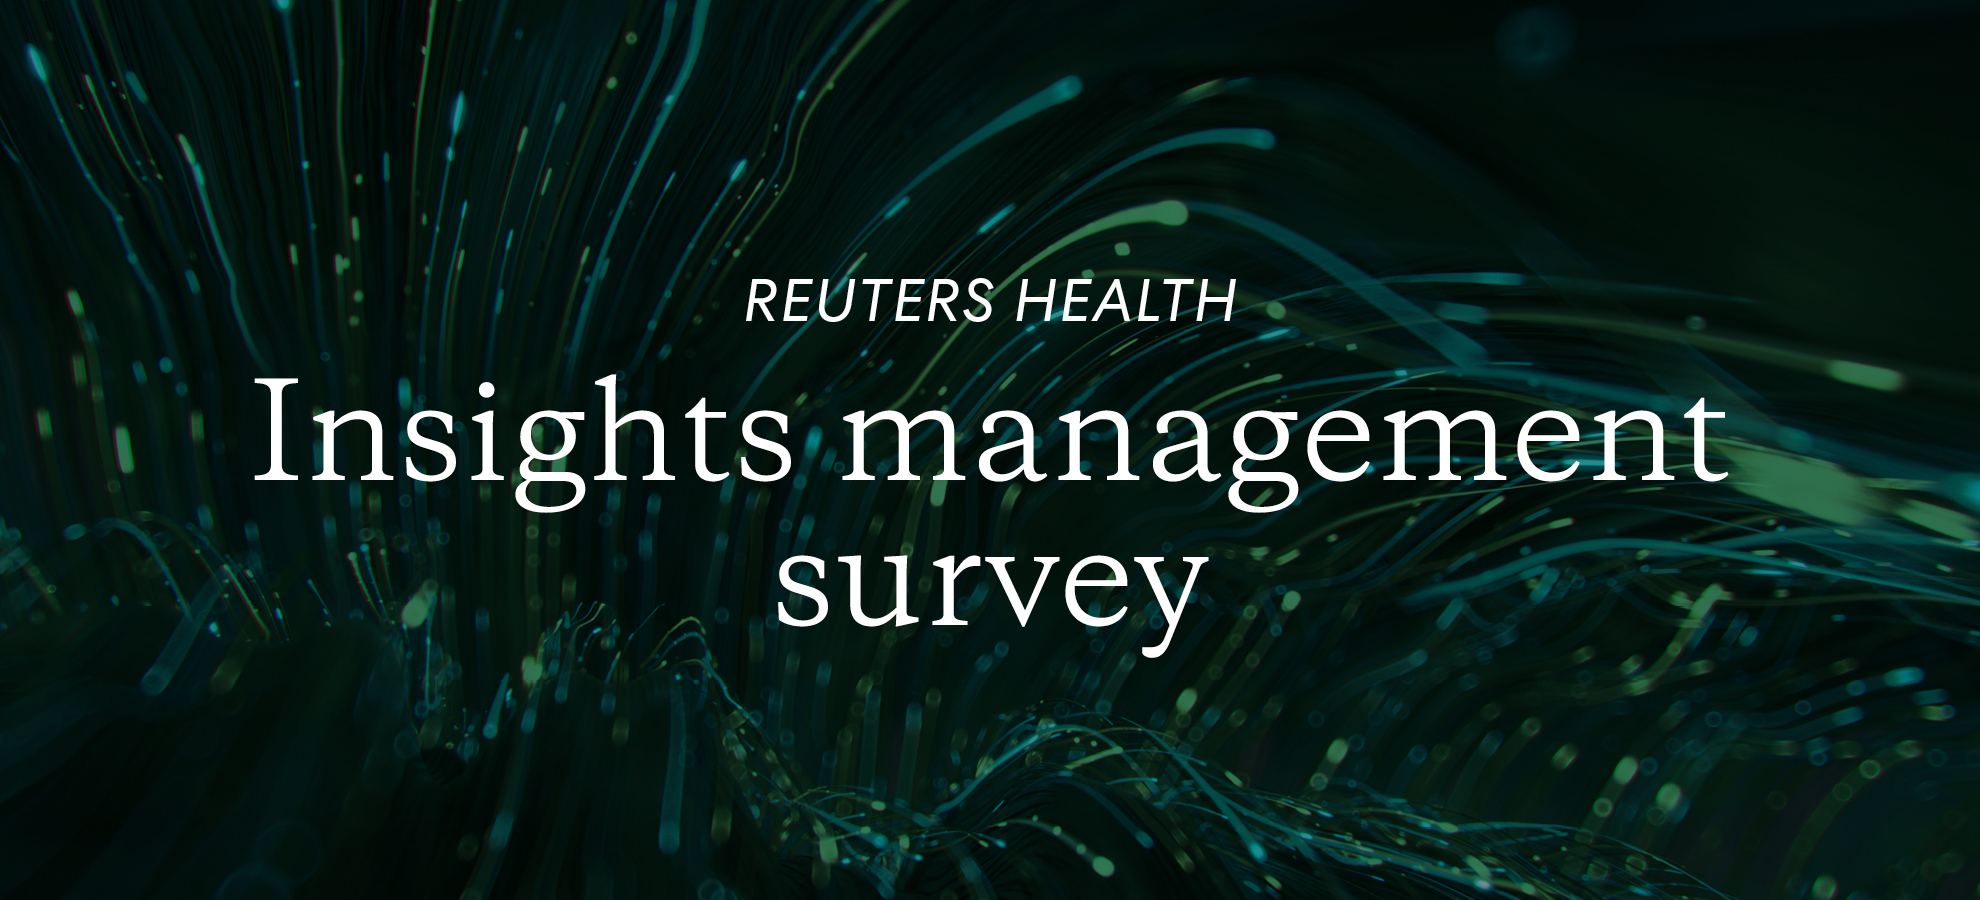 Insights on insights: industry survey highlights